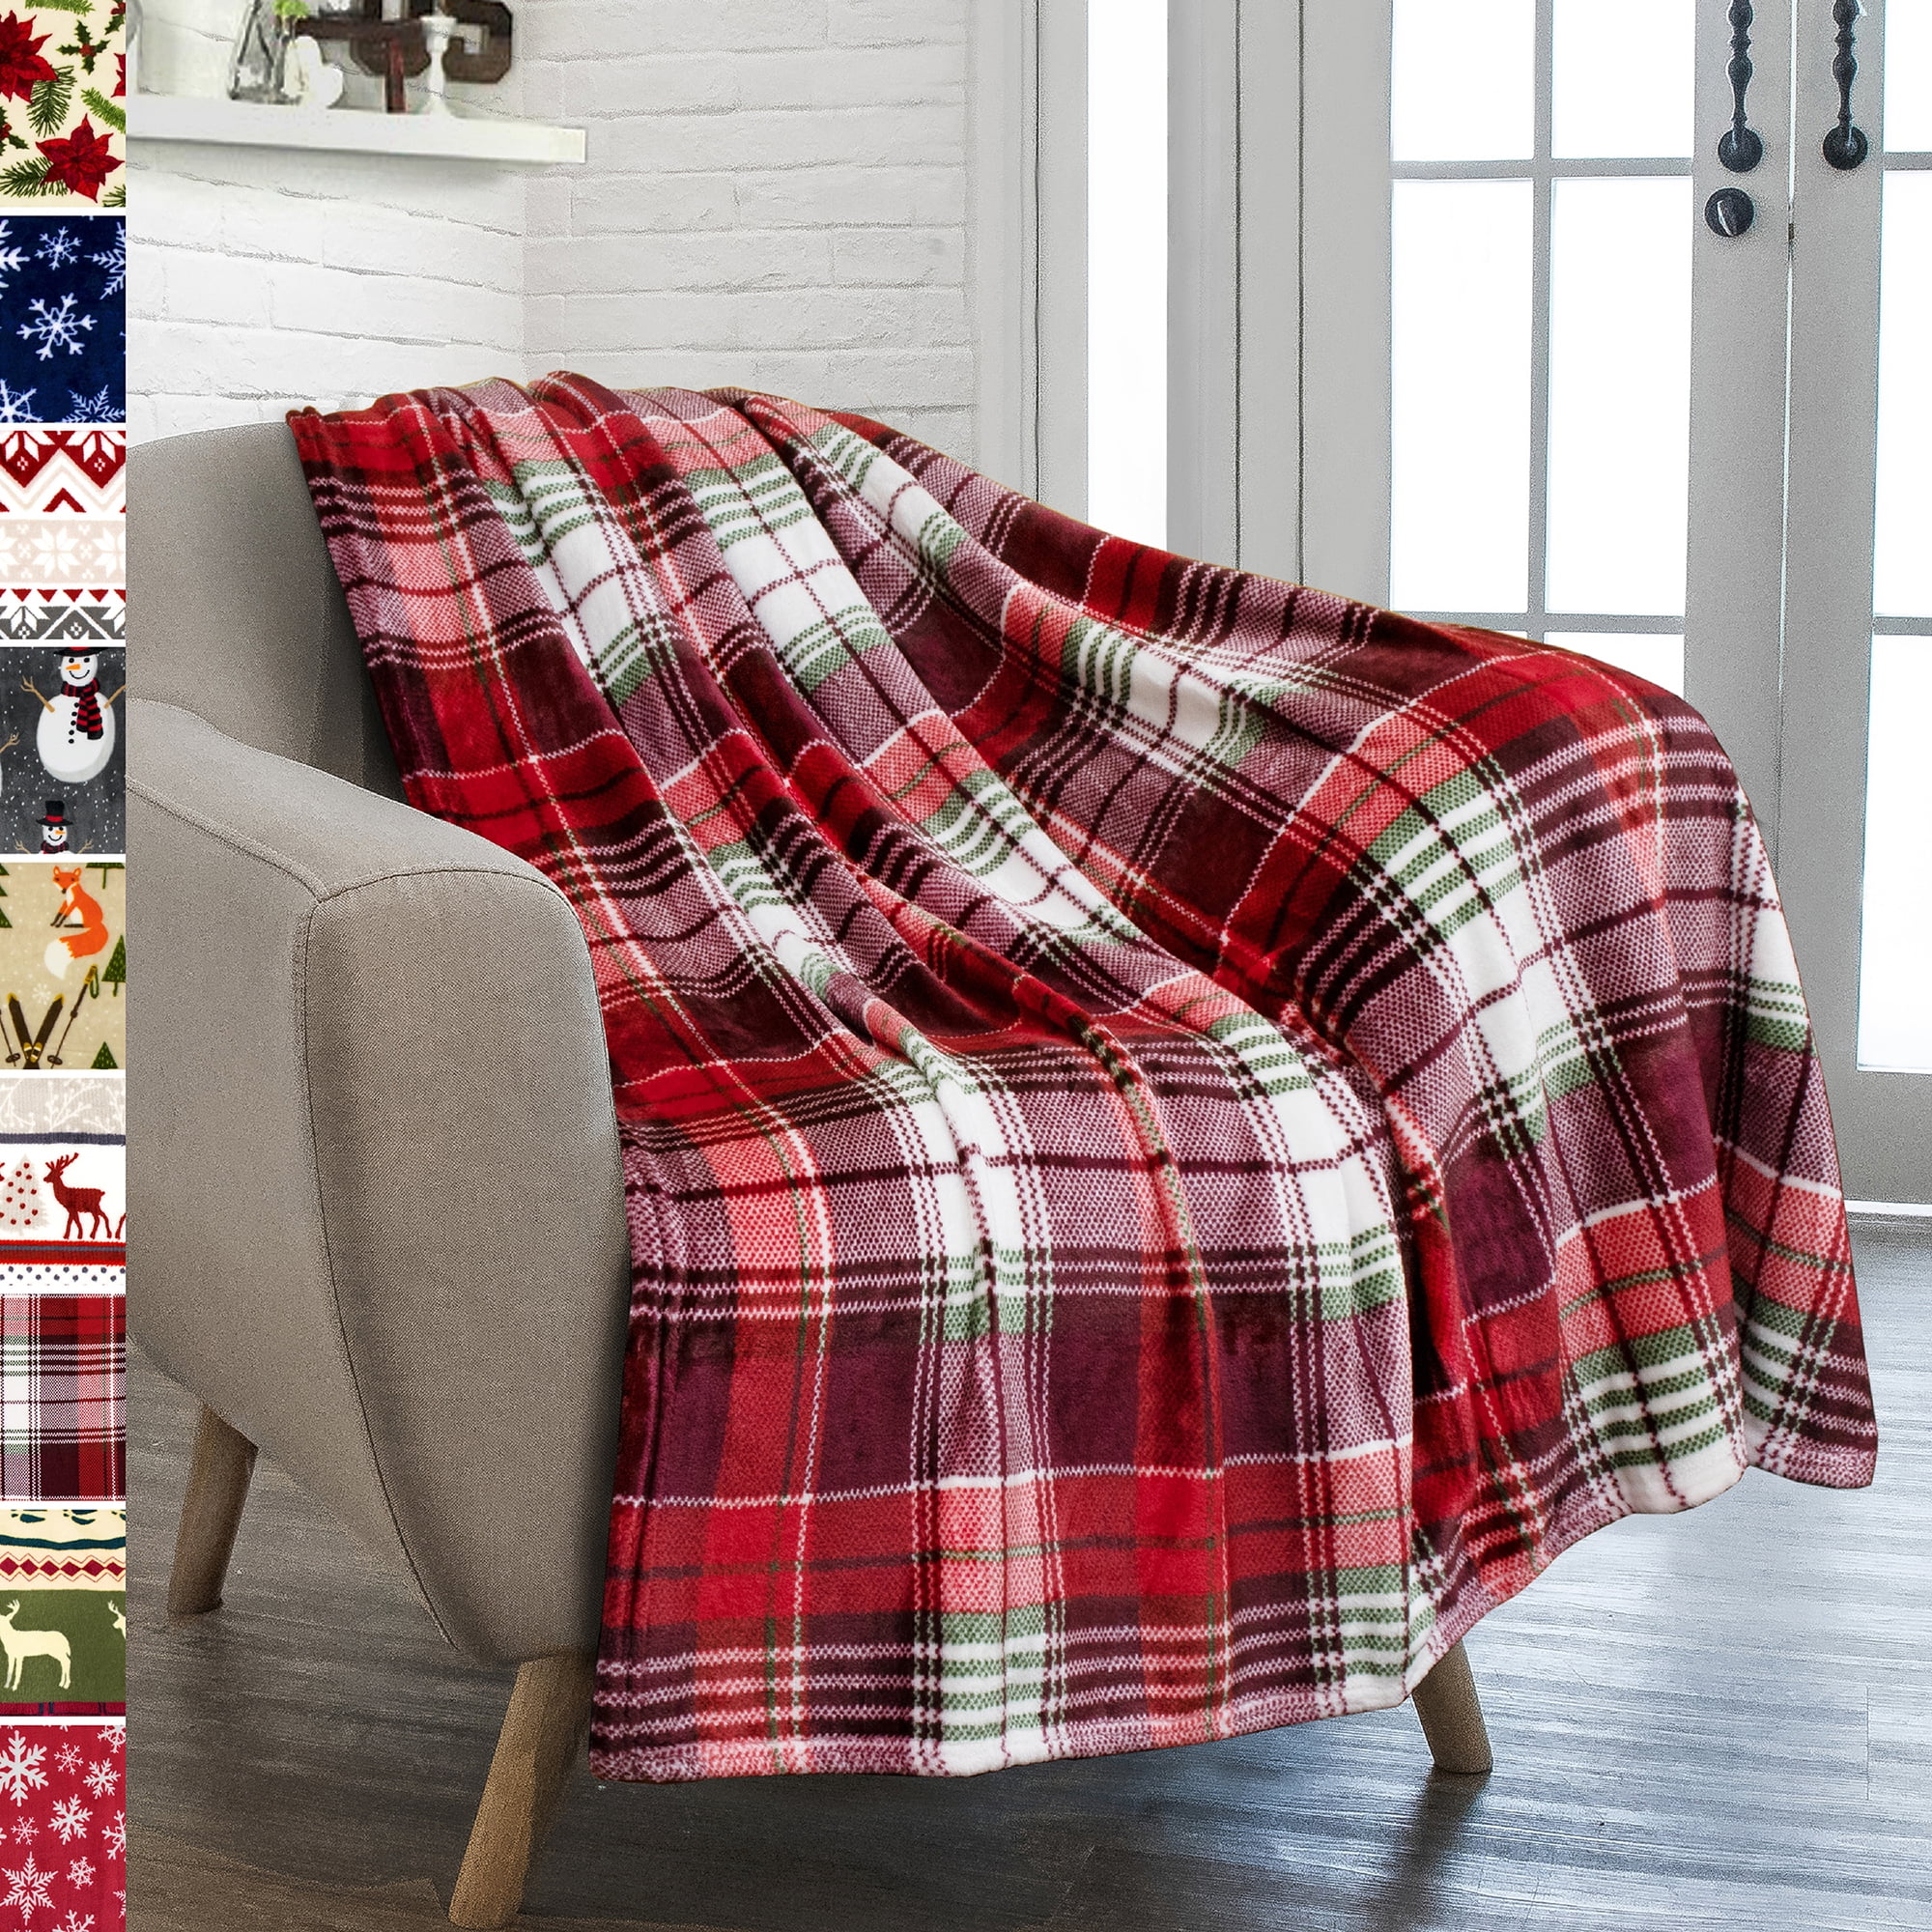 PAVILIA Christmas Throw Blanket | Holiday Christmas Red Fleece Blanket |  Soft, Plush, Warm Winter Cabin Throw, 50x60 (Red Green Plaid) - Walmart.com